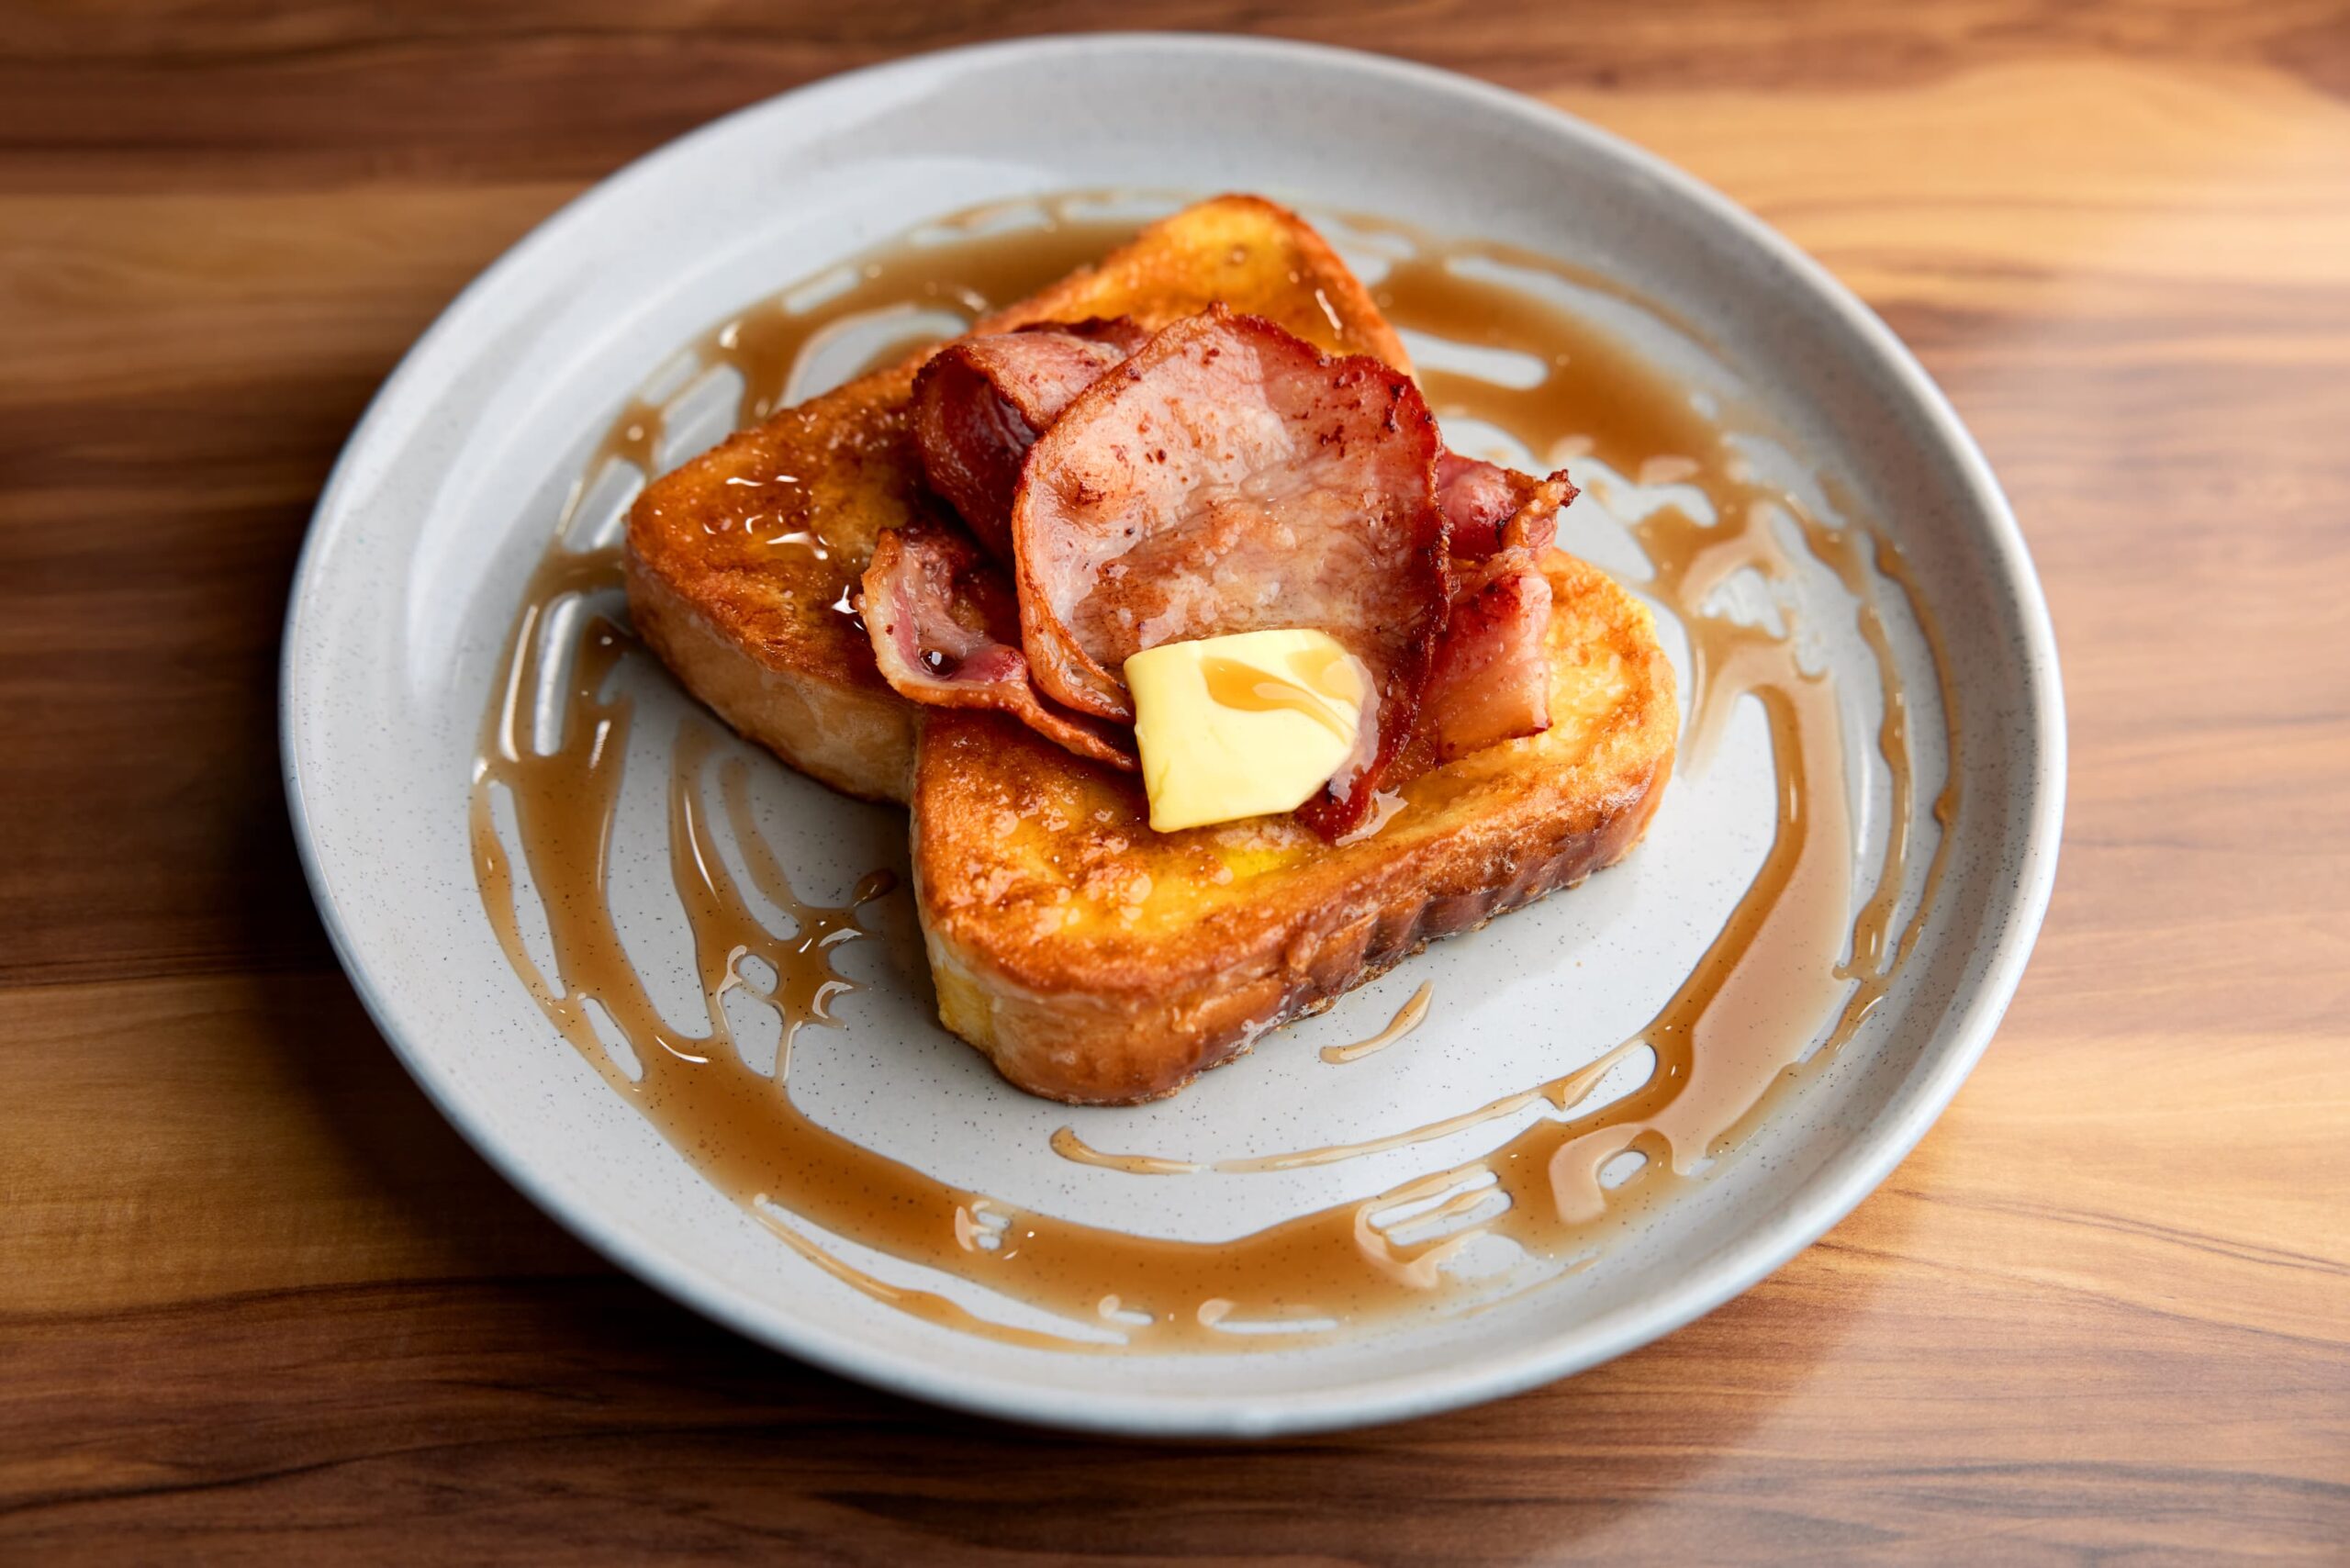 Sunni Cafe French Toast with Crispy Bacon scaled - French Toast with Crispy Bacon